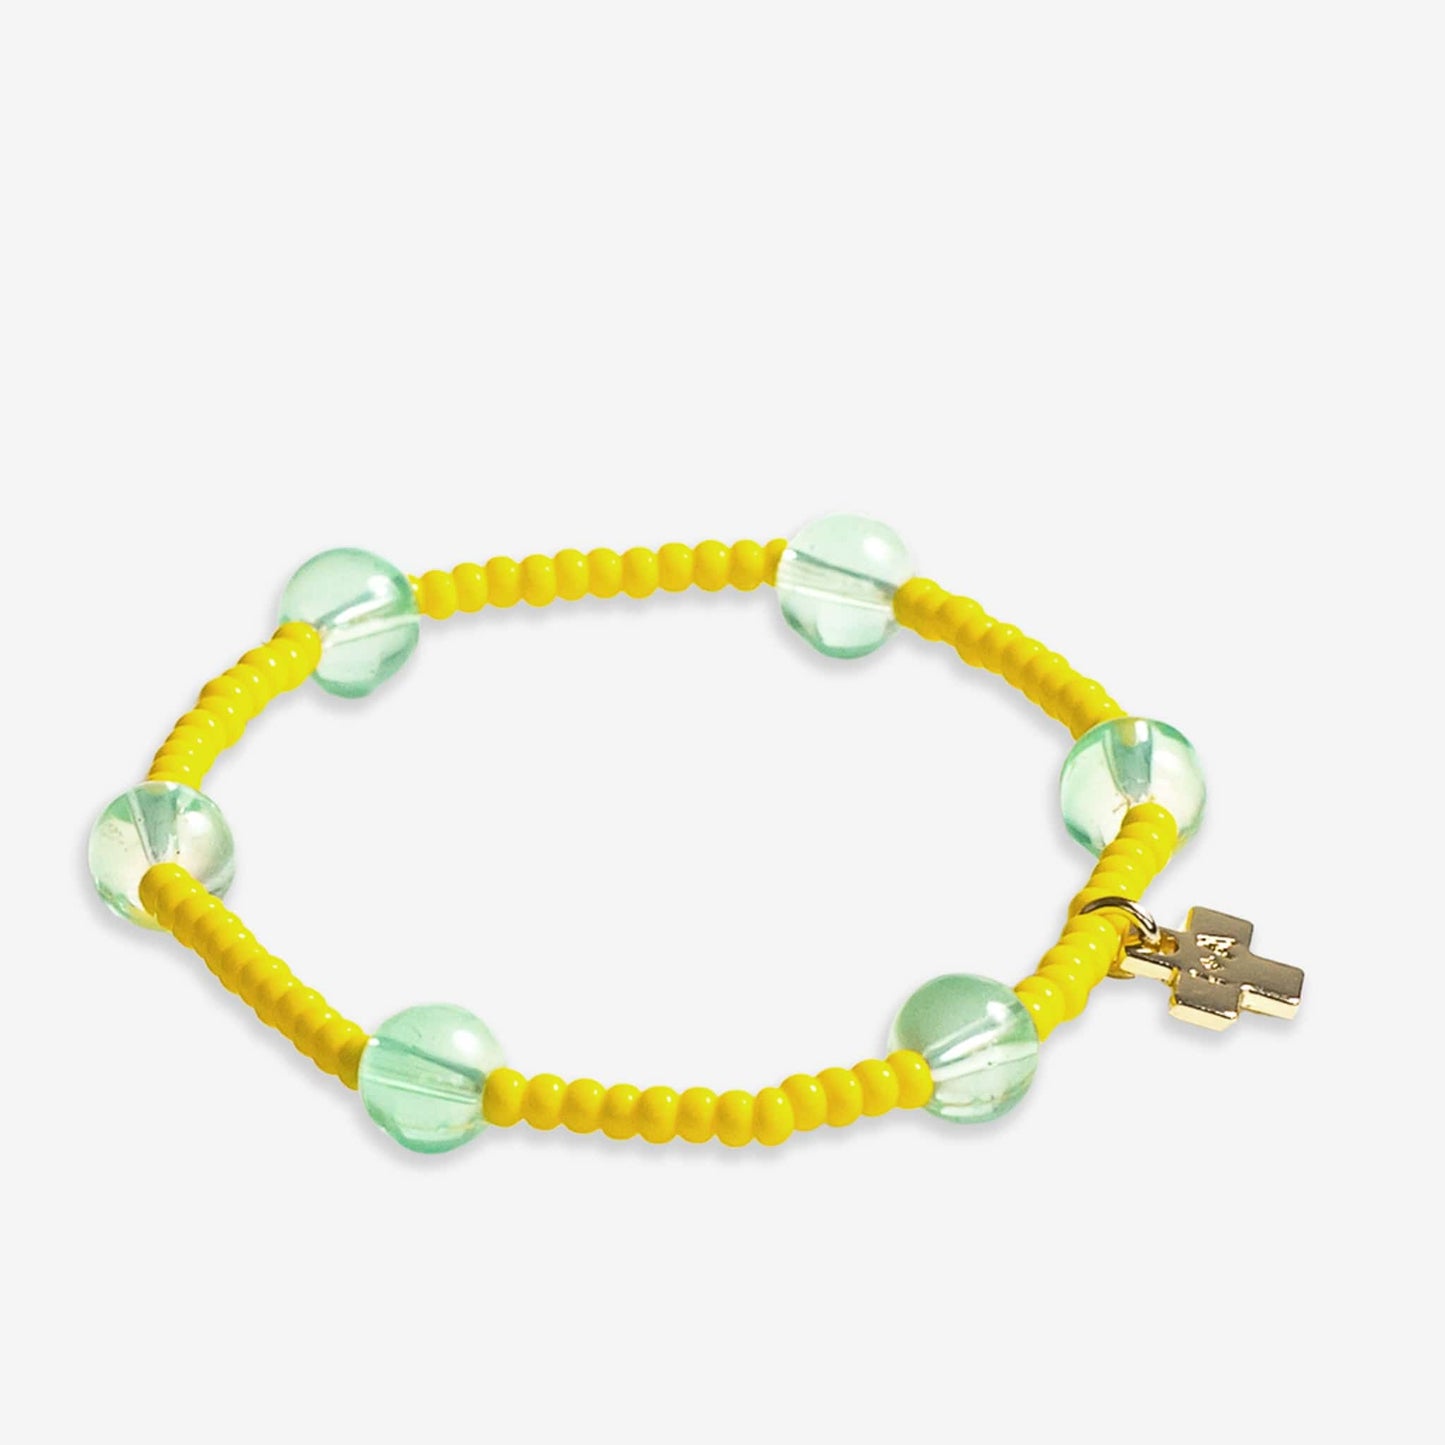 Mia Small Seed Bead With Round Stones Stretch Bracelet Lemon/Mint